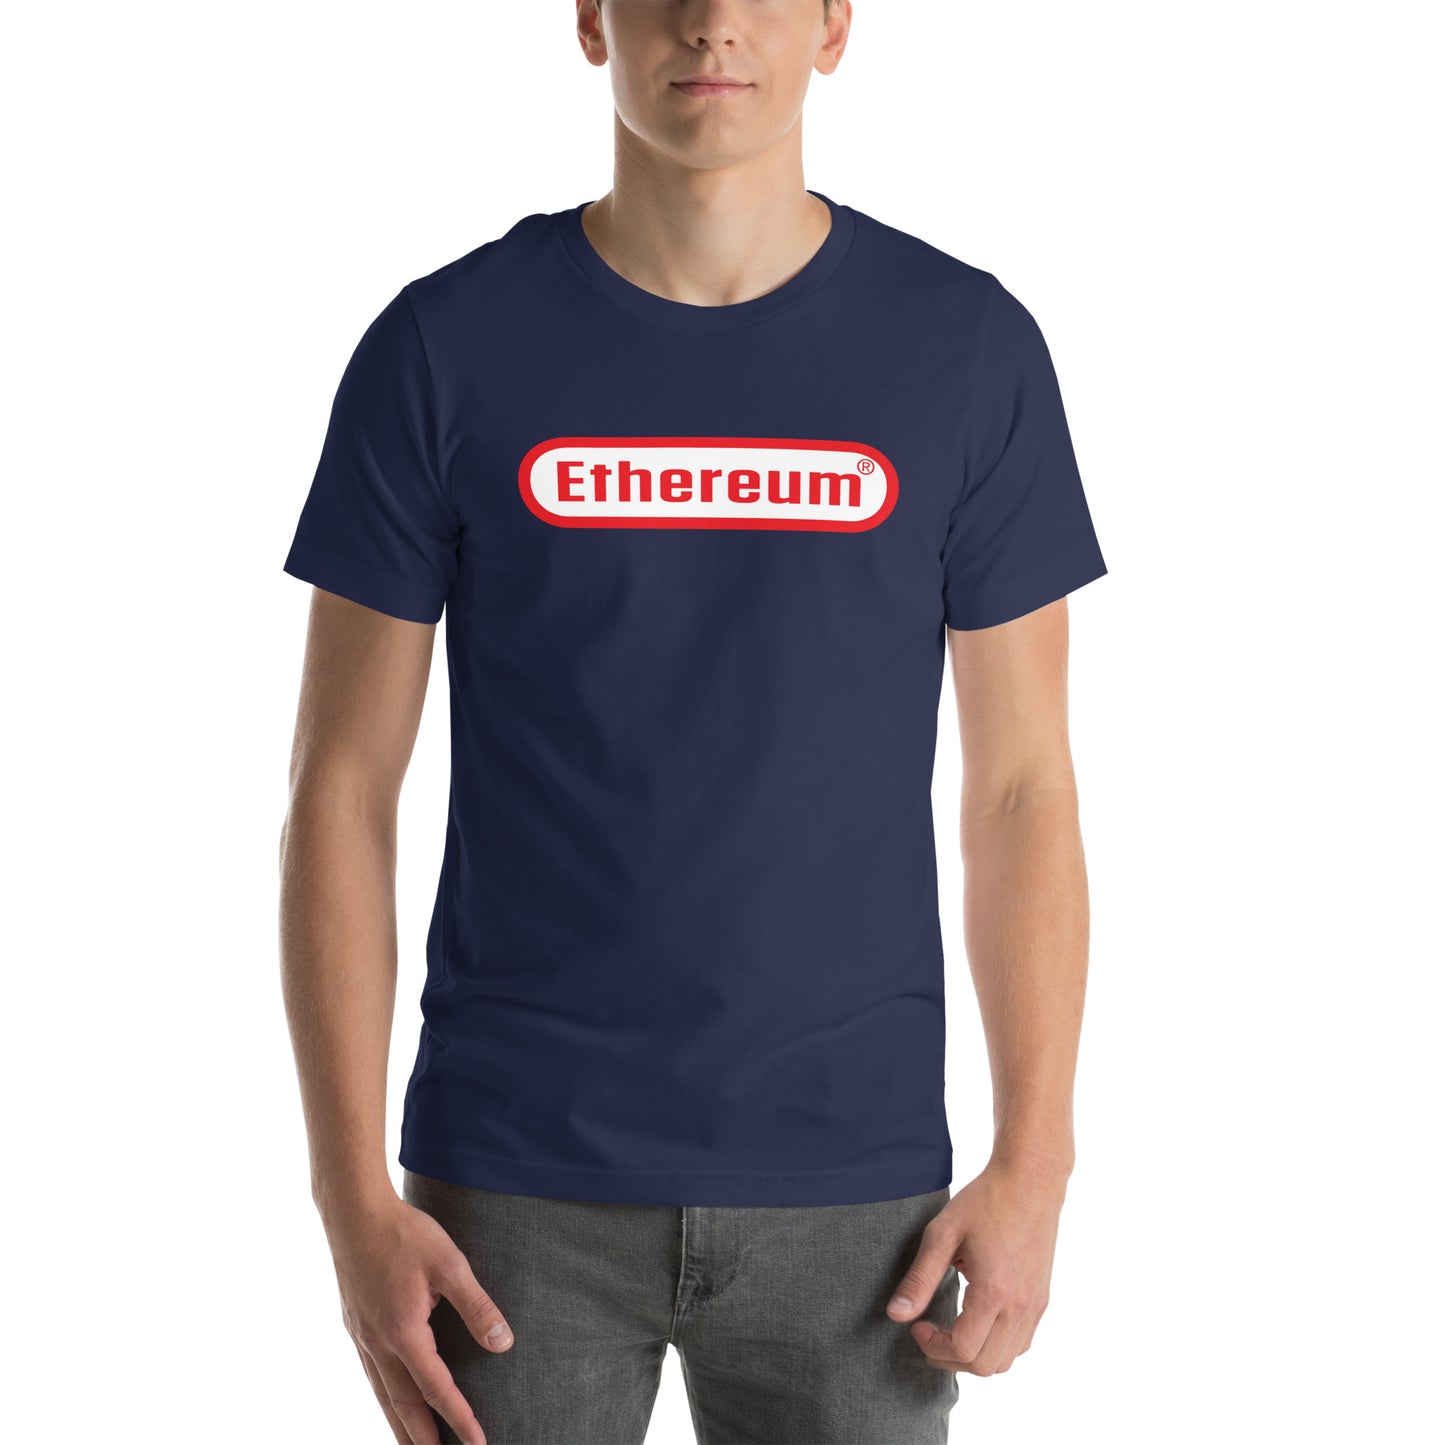 Ethereum Console T-Shirt